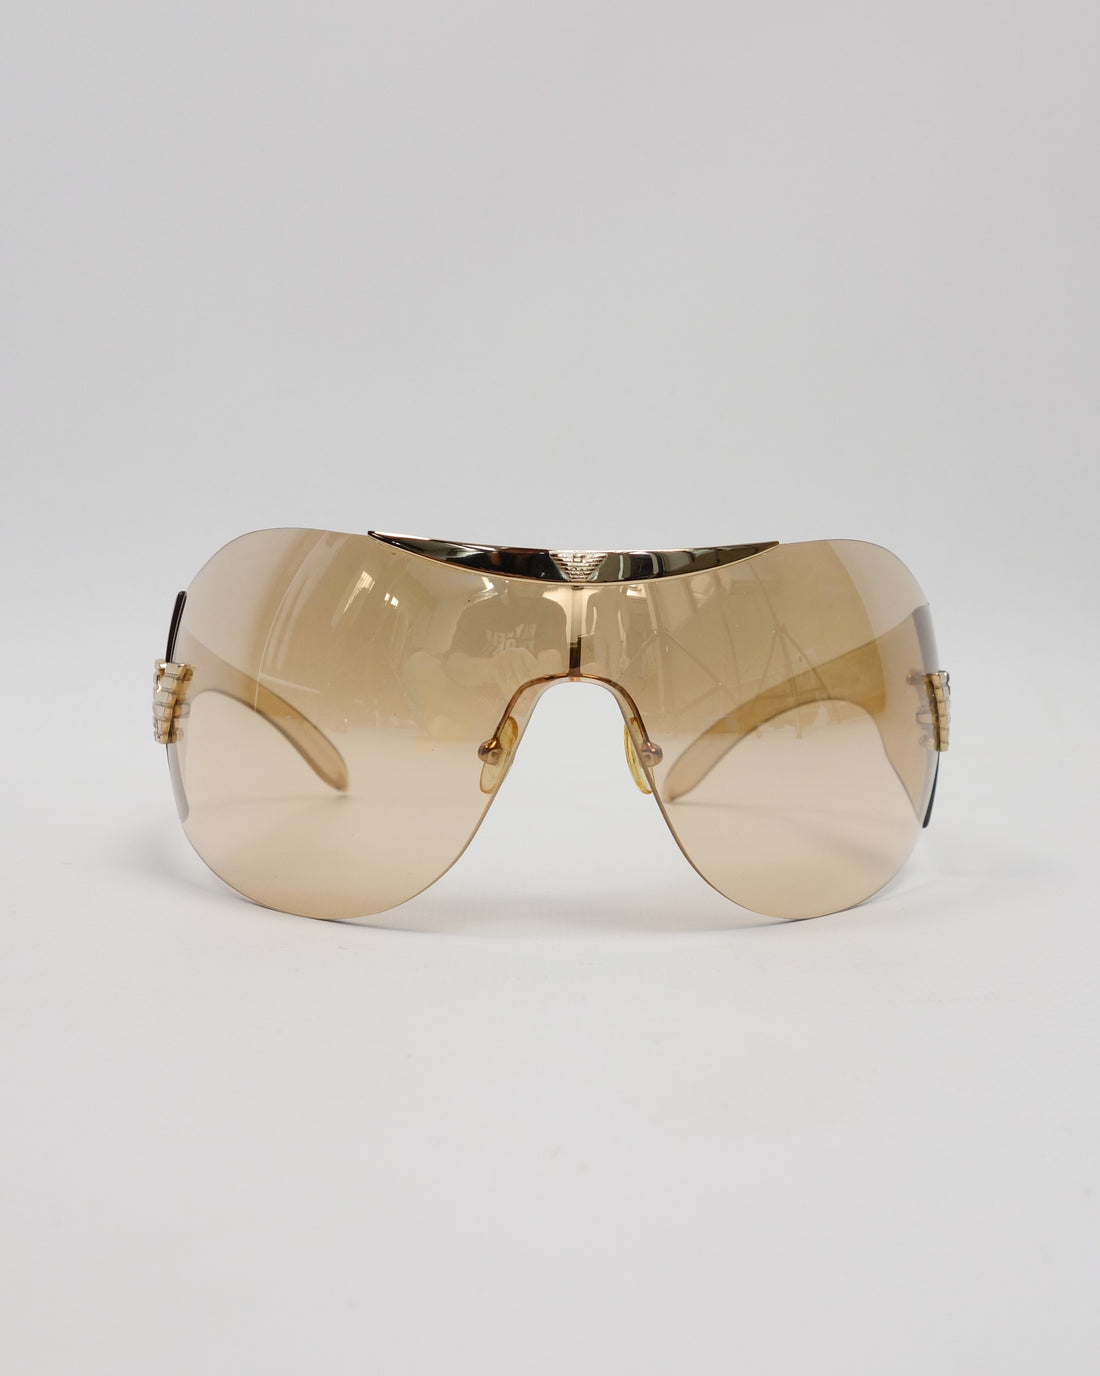 Armani Smoked All Over Mask Sunglasses 2000's